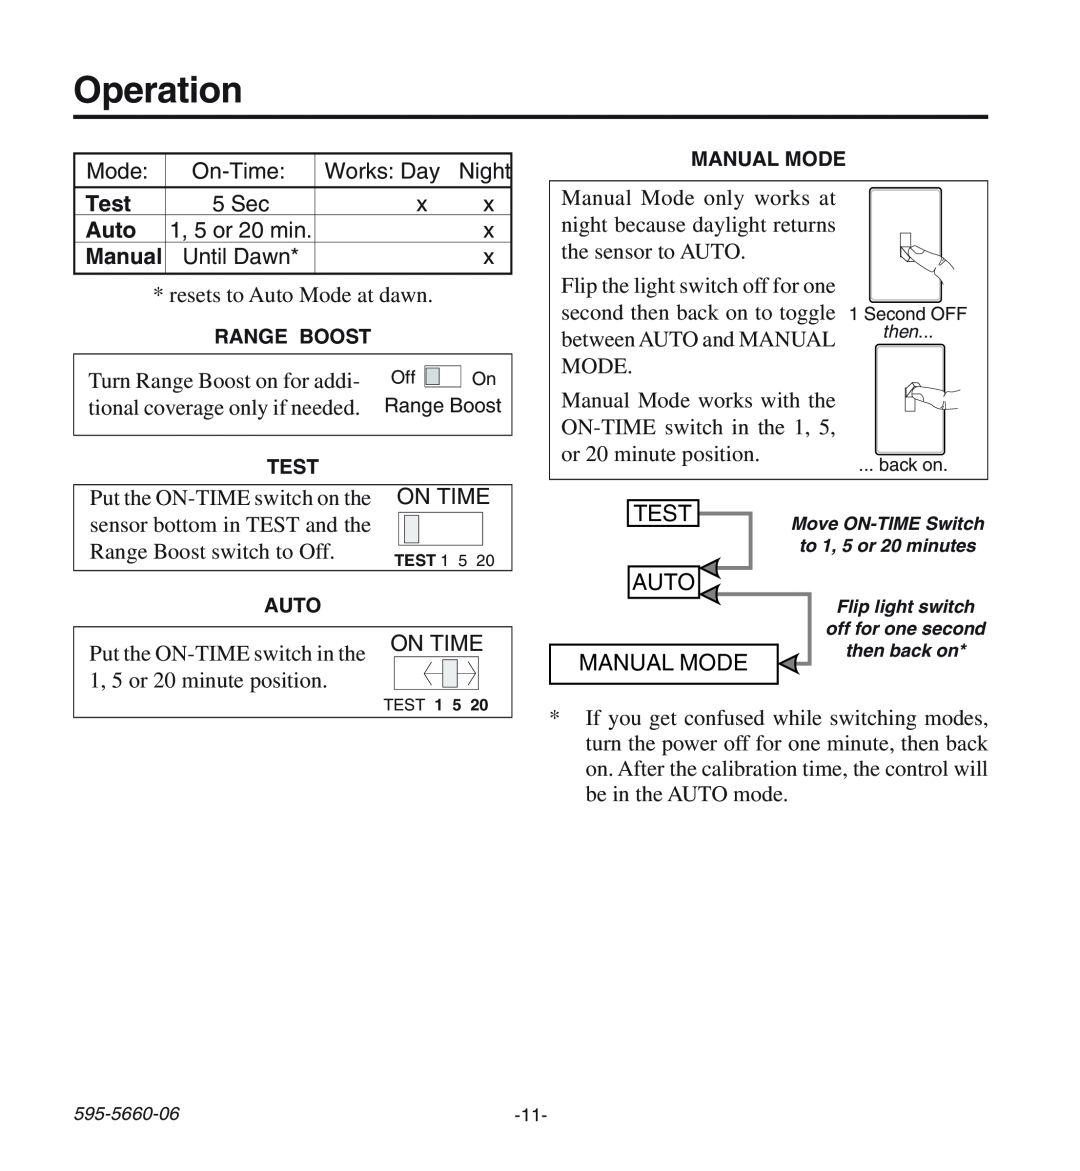 Desa HD-9140 manual Operation, Test, Auto, Manual Mode 